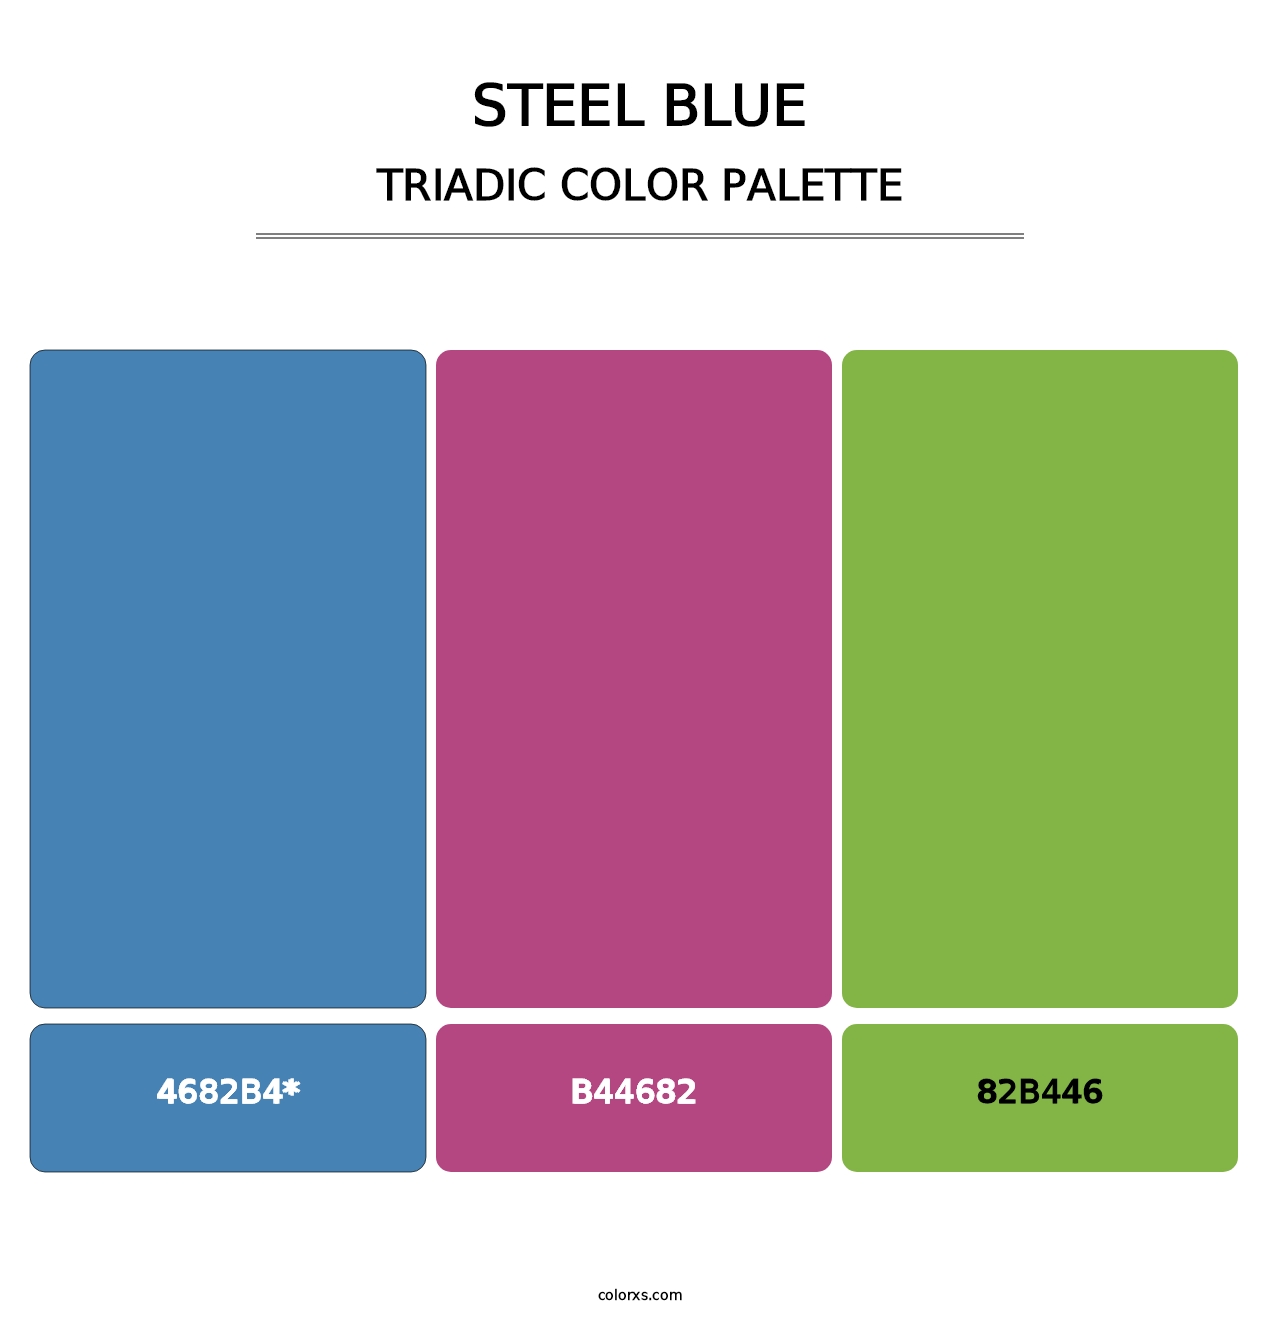 Steel Blue - Triadic Color Palette